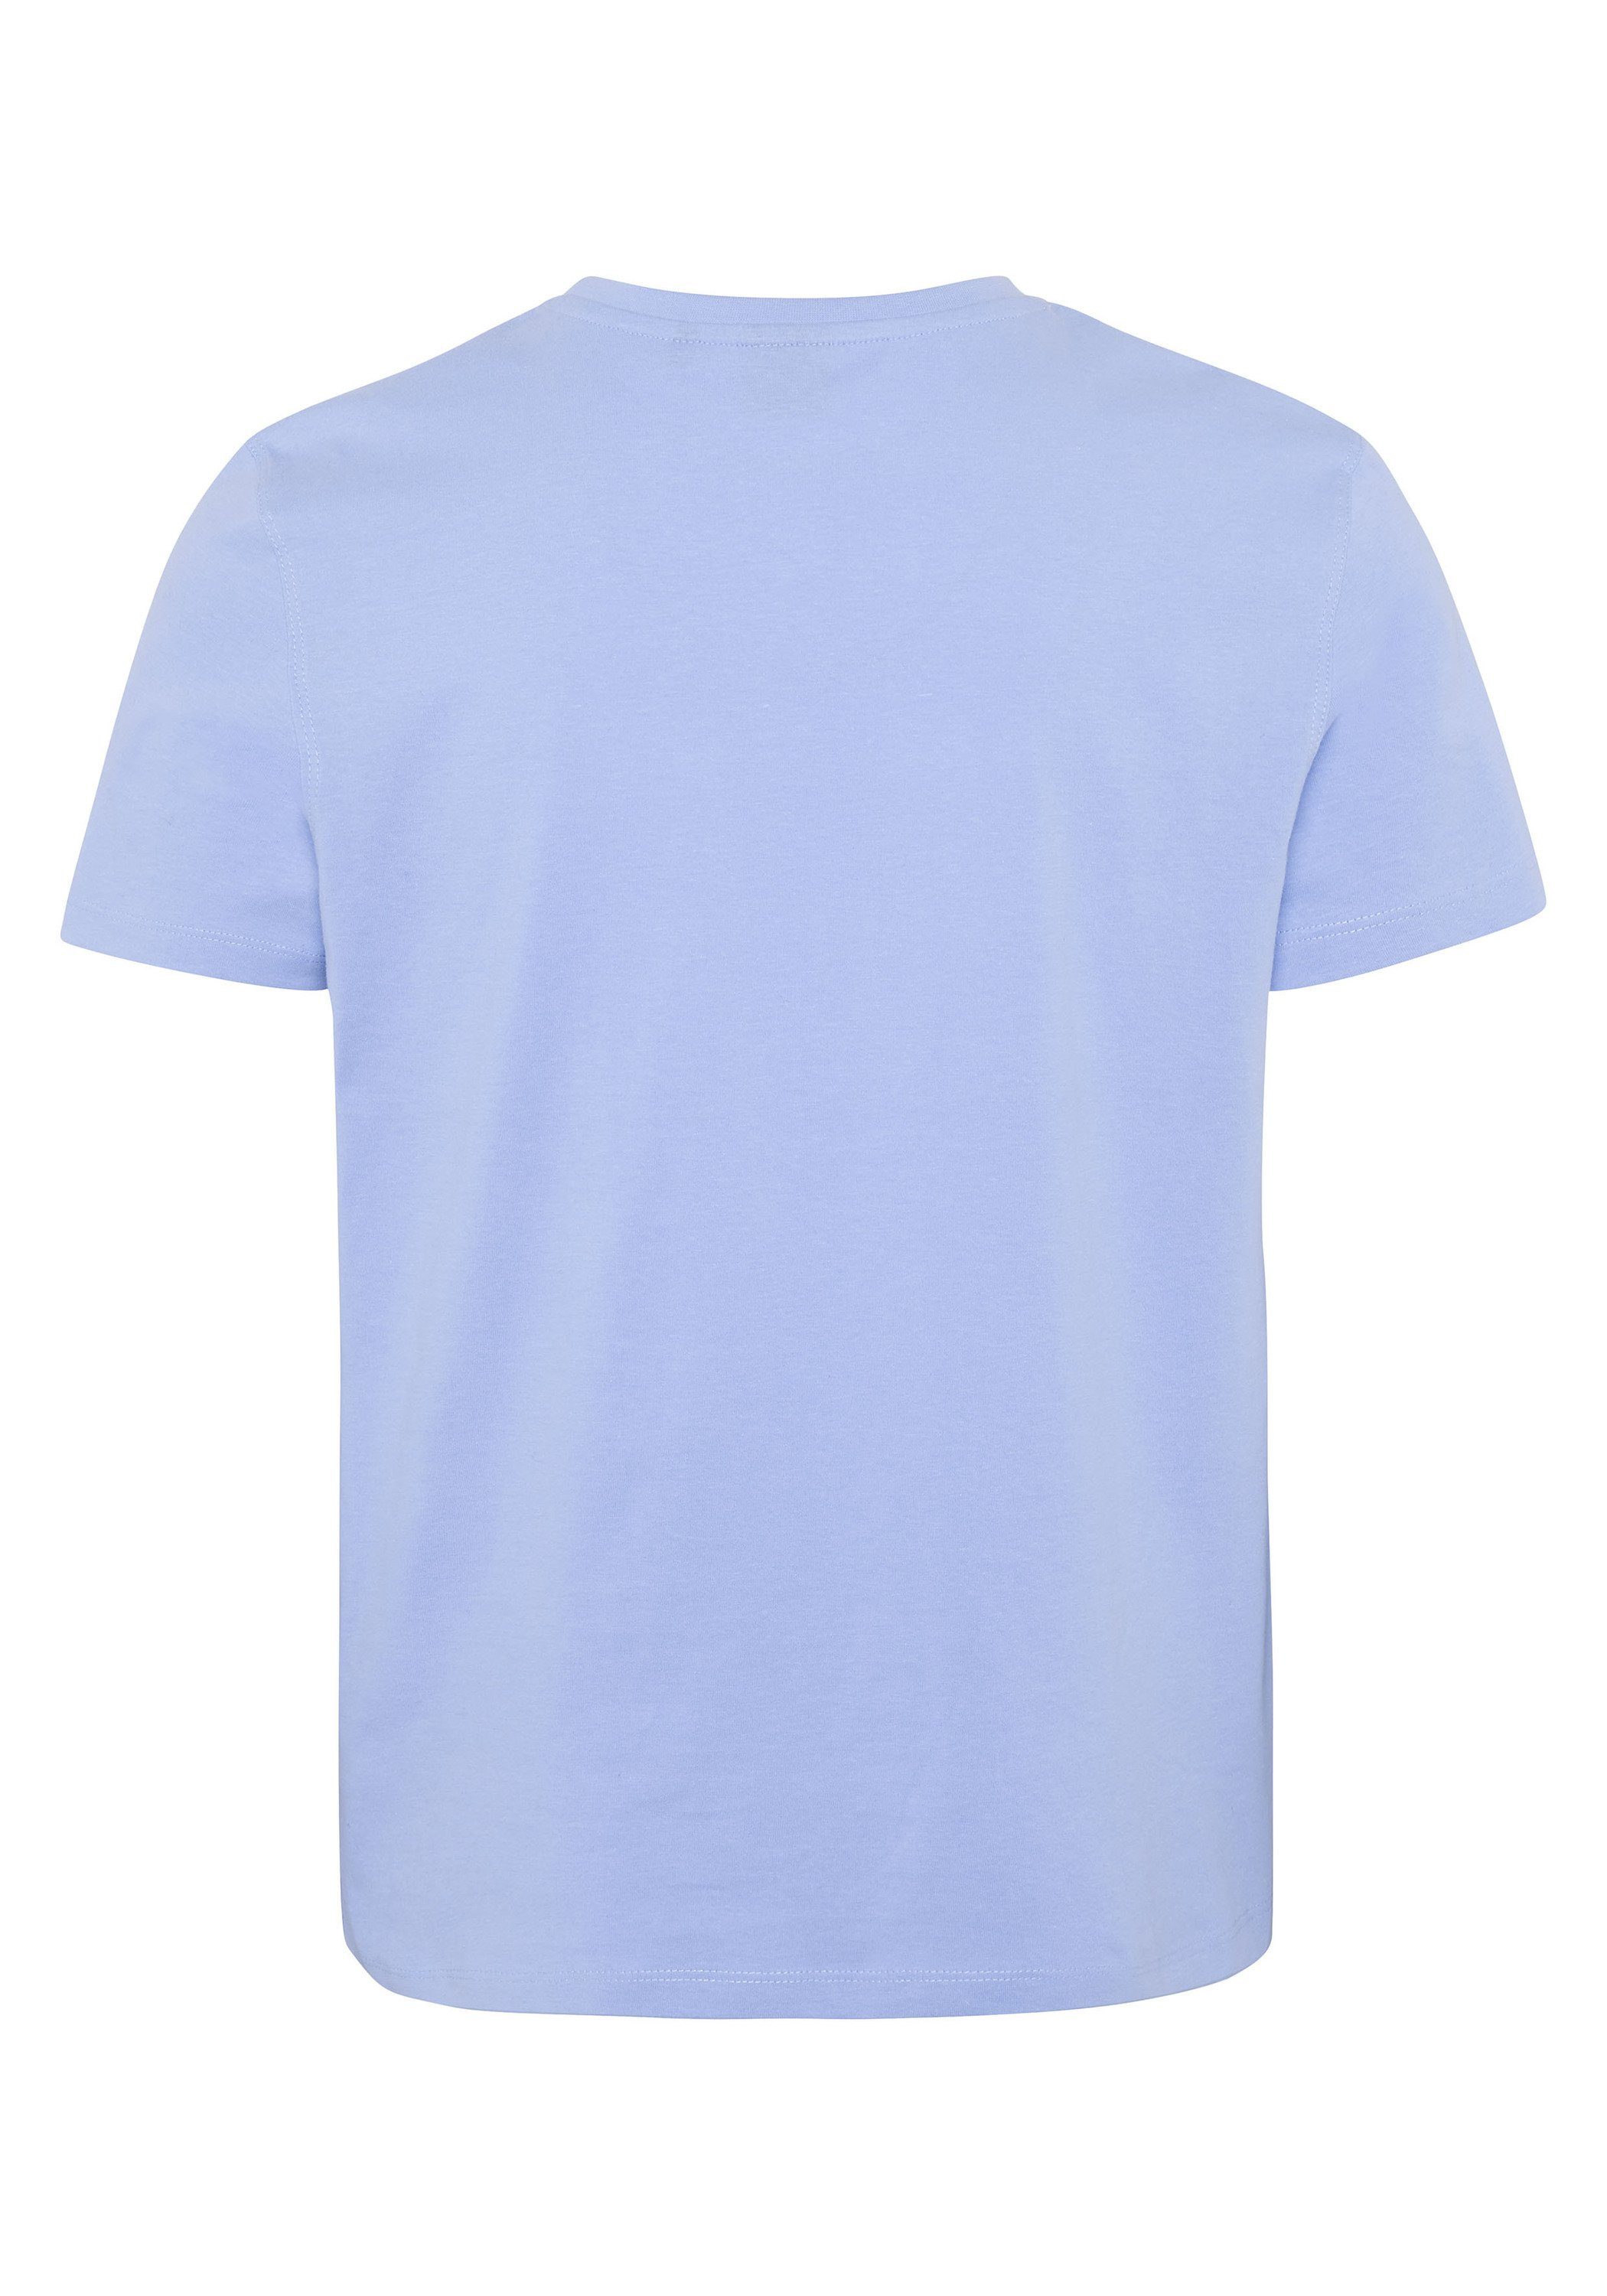 Frontprint Logo Brunnera mit Blue Print-Shirt Sylt Polo Neon 16-3922